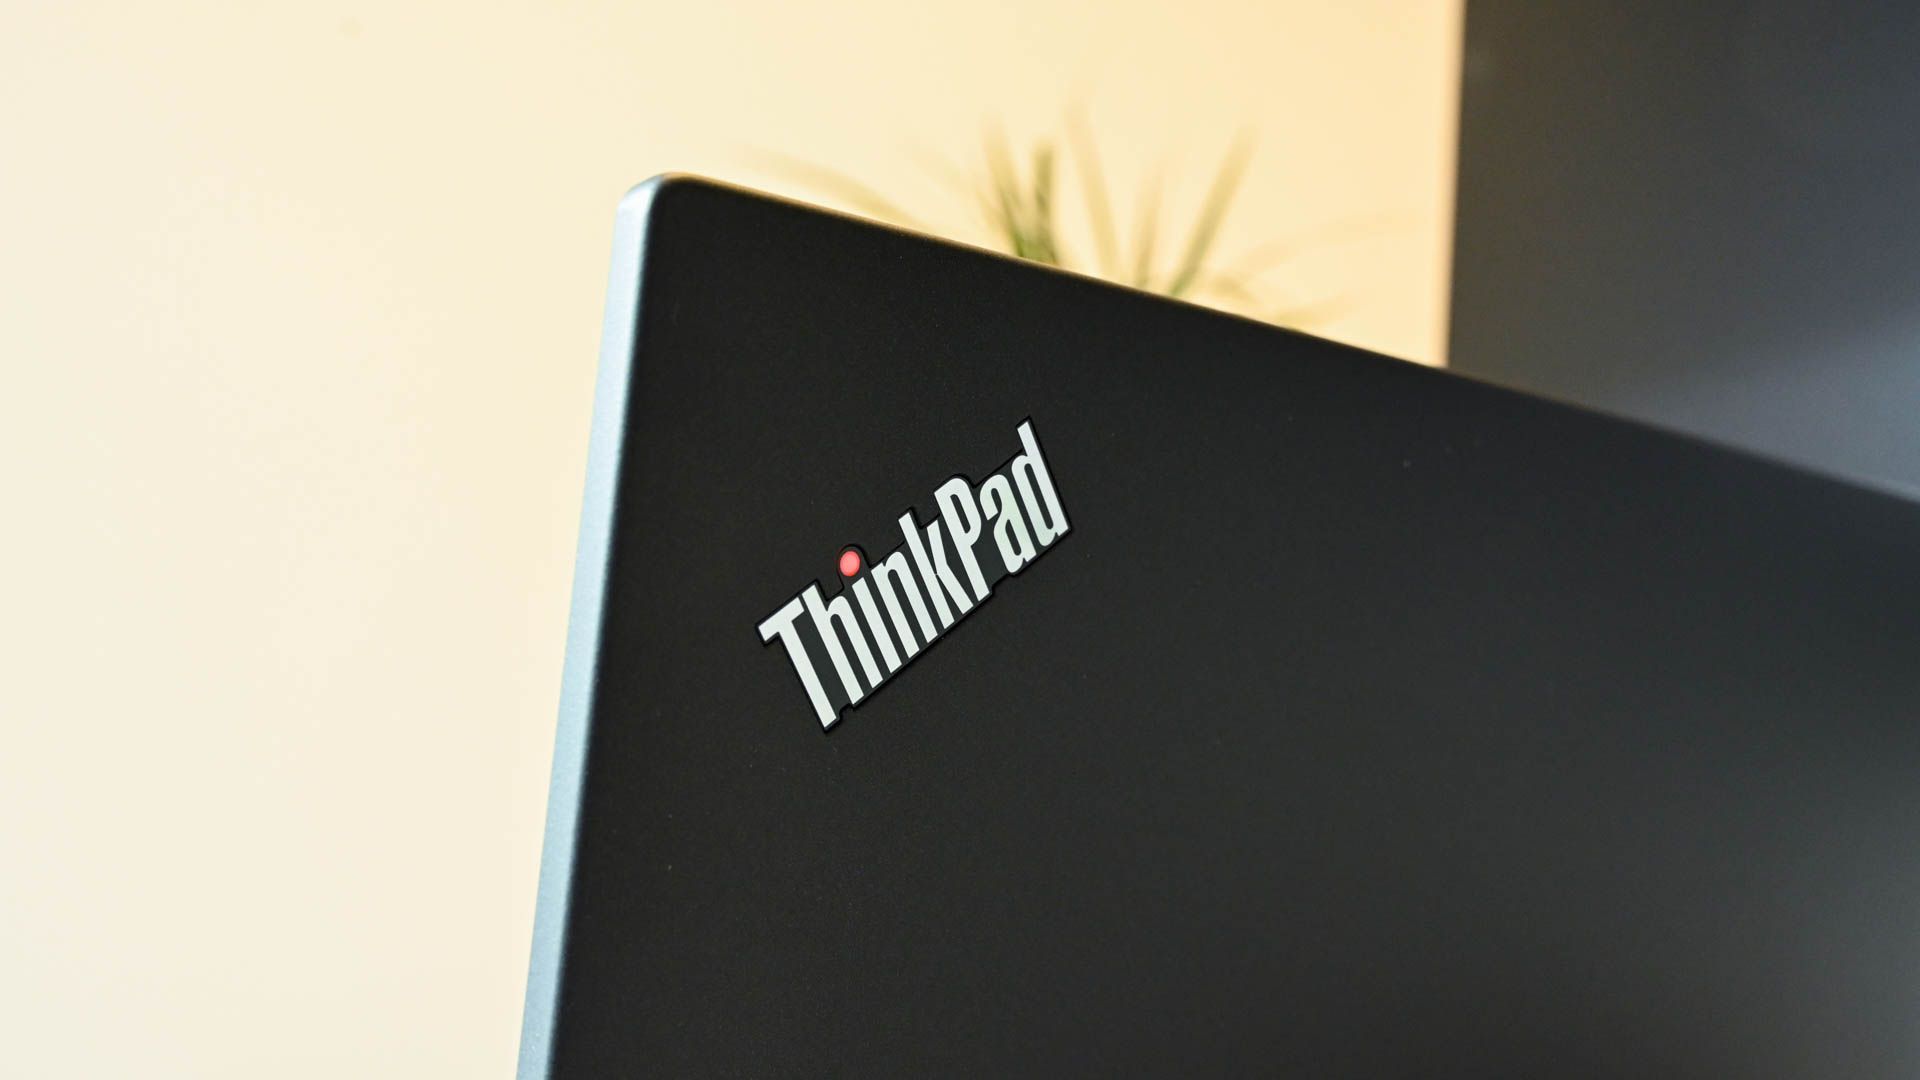 A close up of the ThinkPad logo.